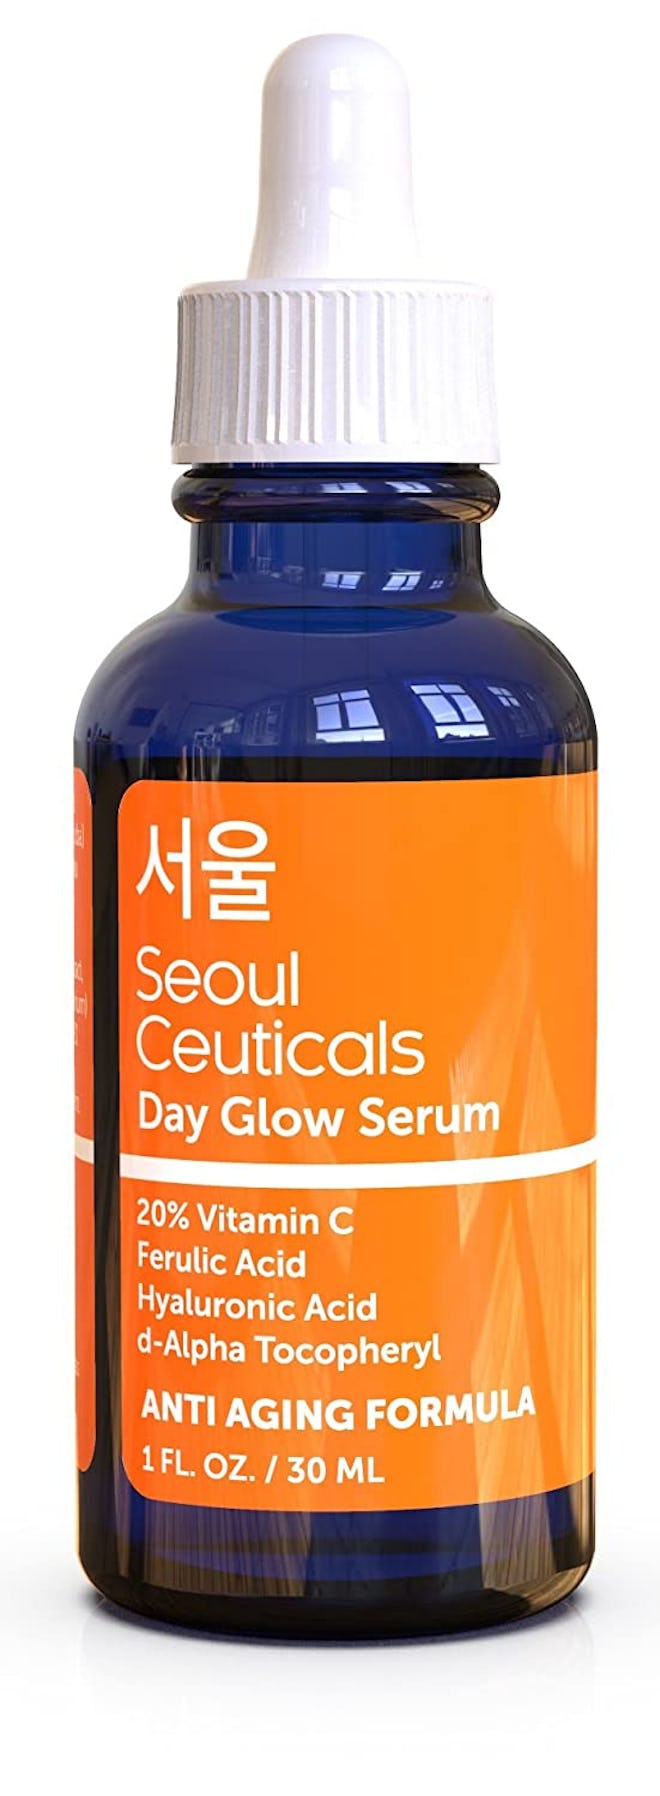 SeoulCeuticals Day Glow Serum (1 Oz)